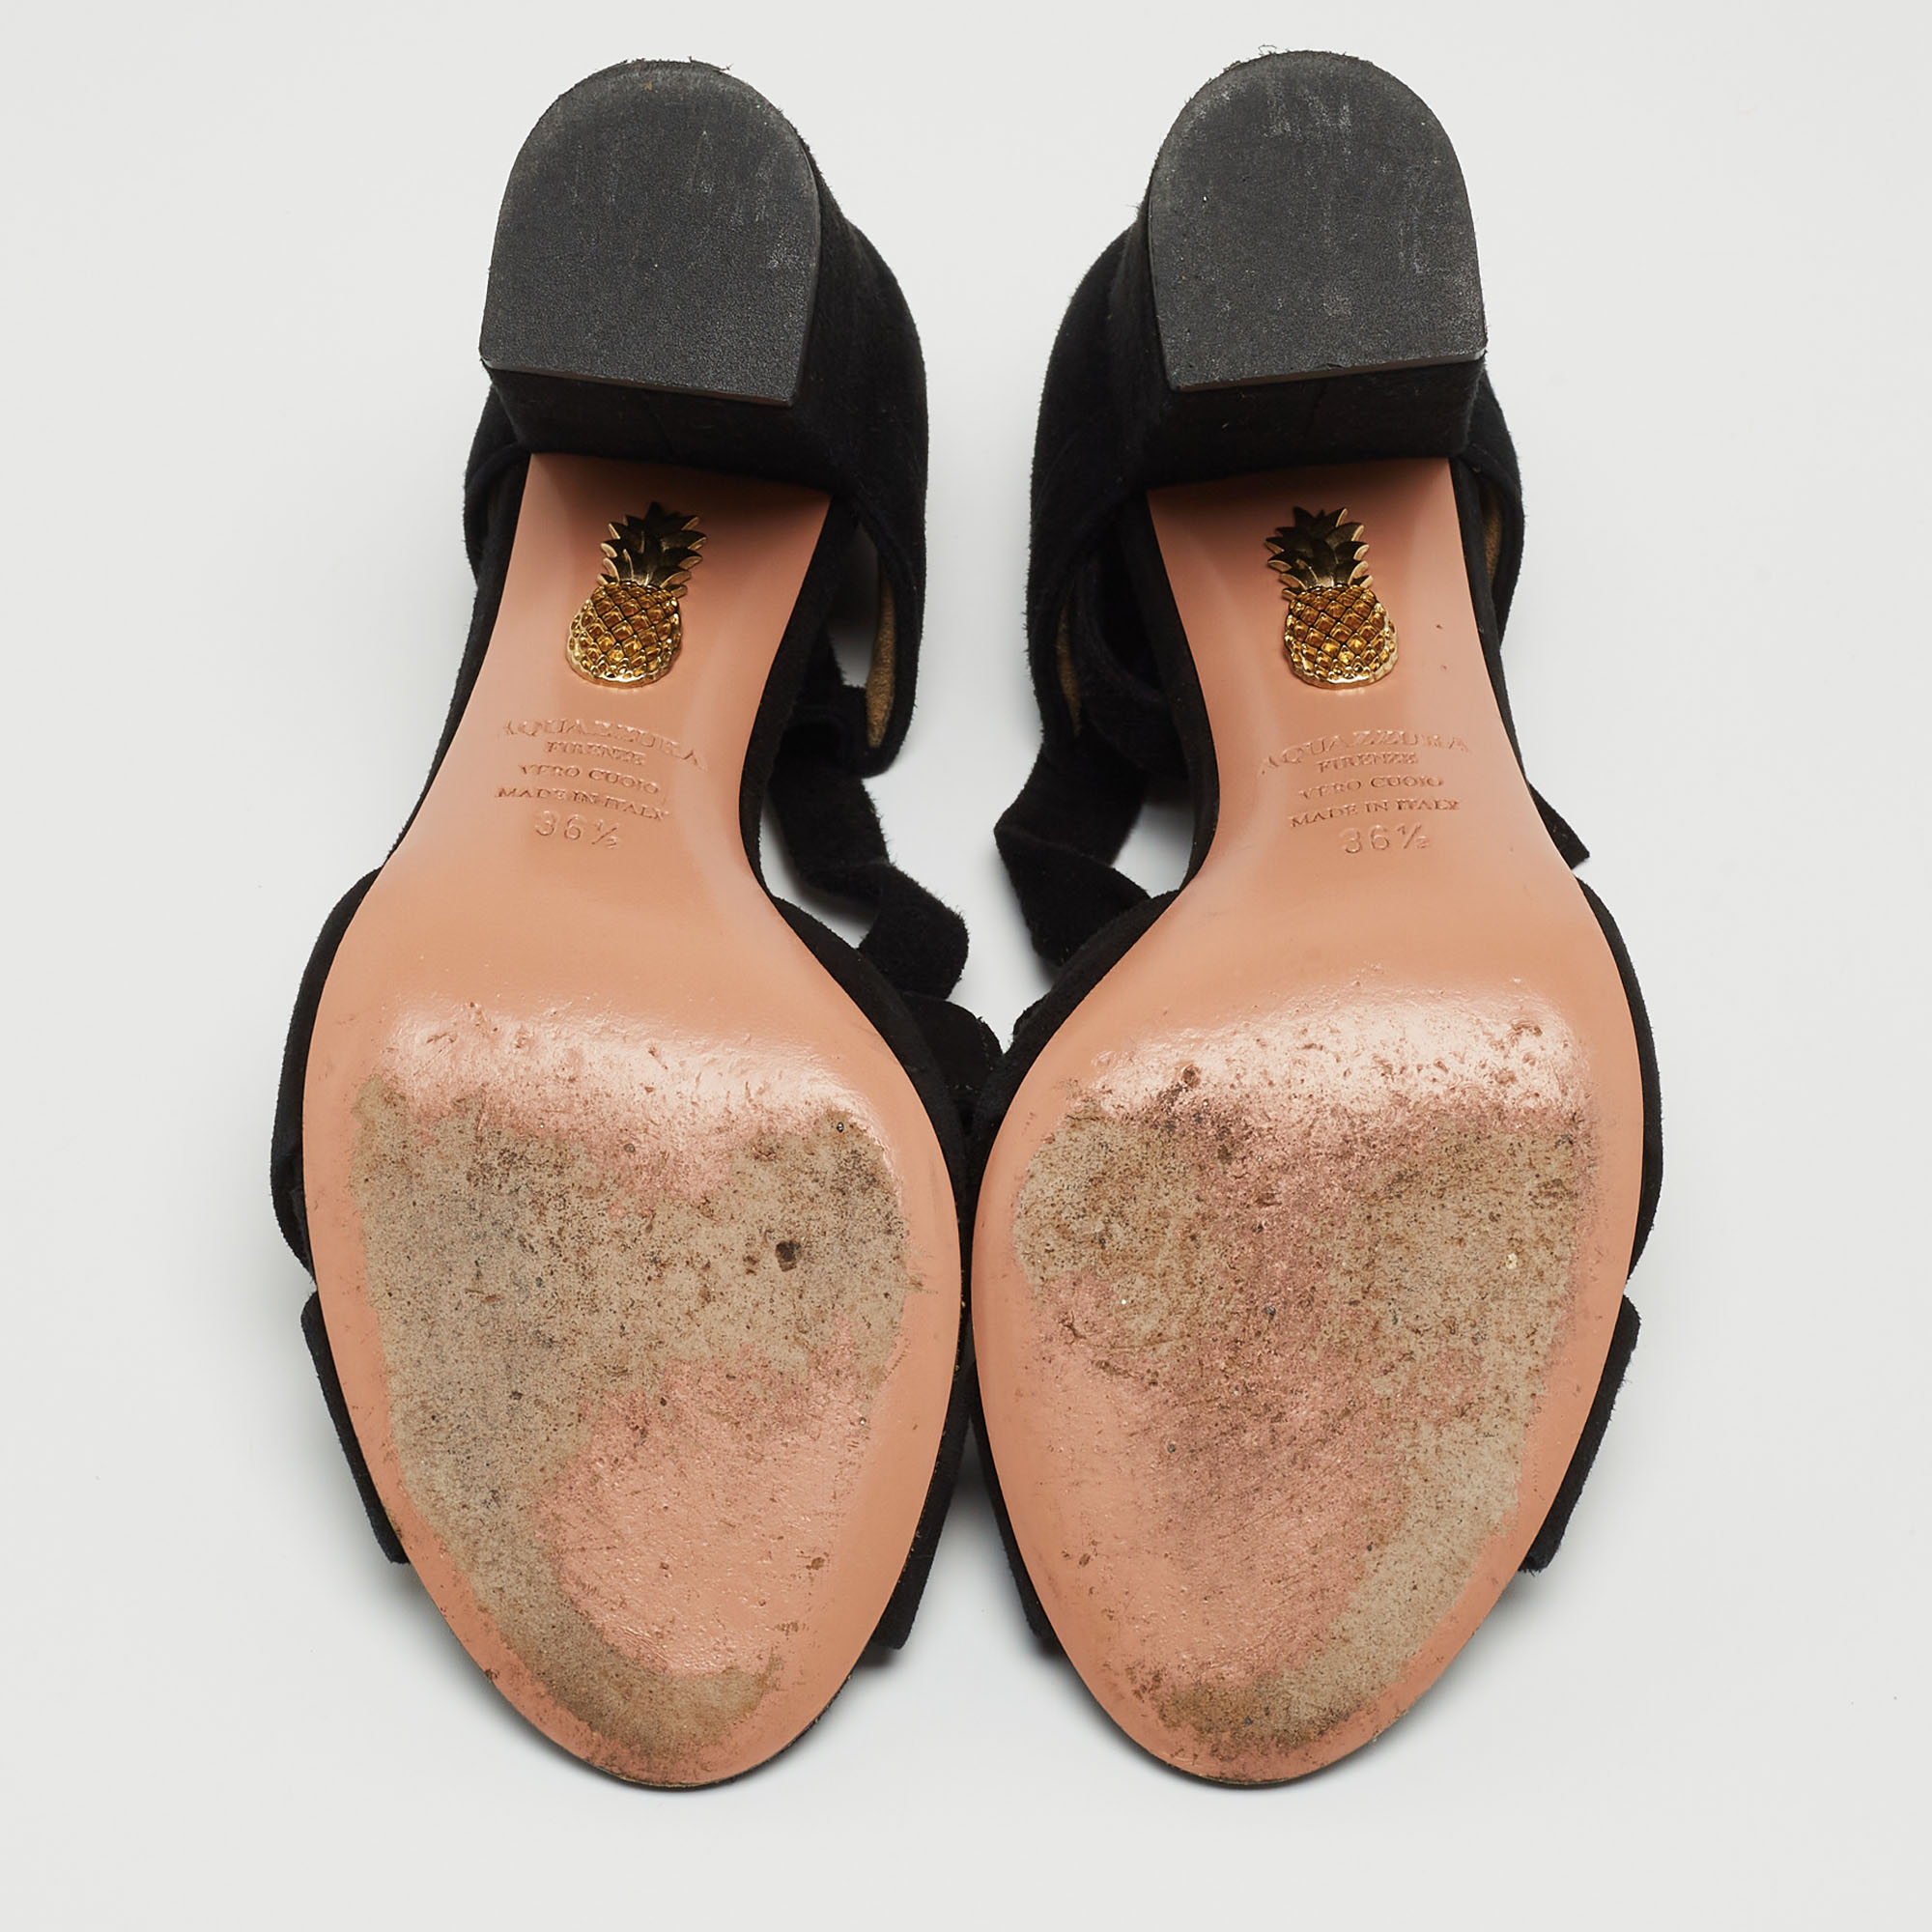 Aquazzura Black Suede Tarzan Sandals Size 36.5